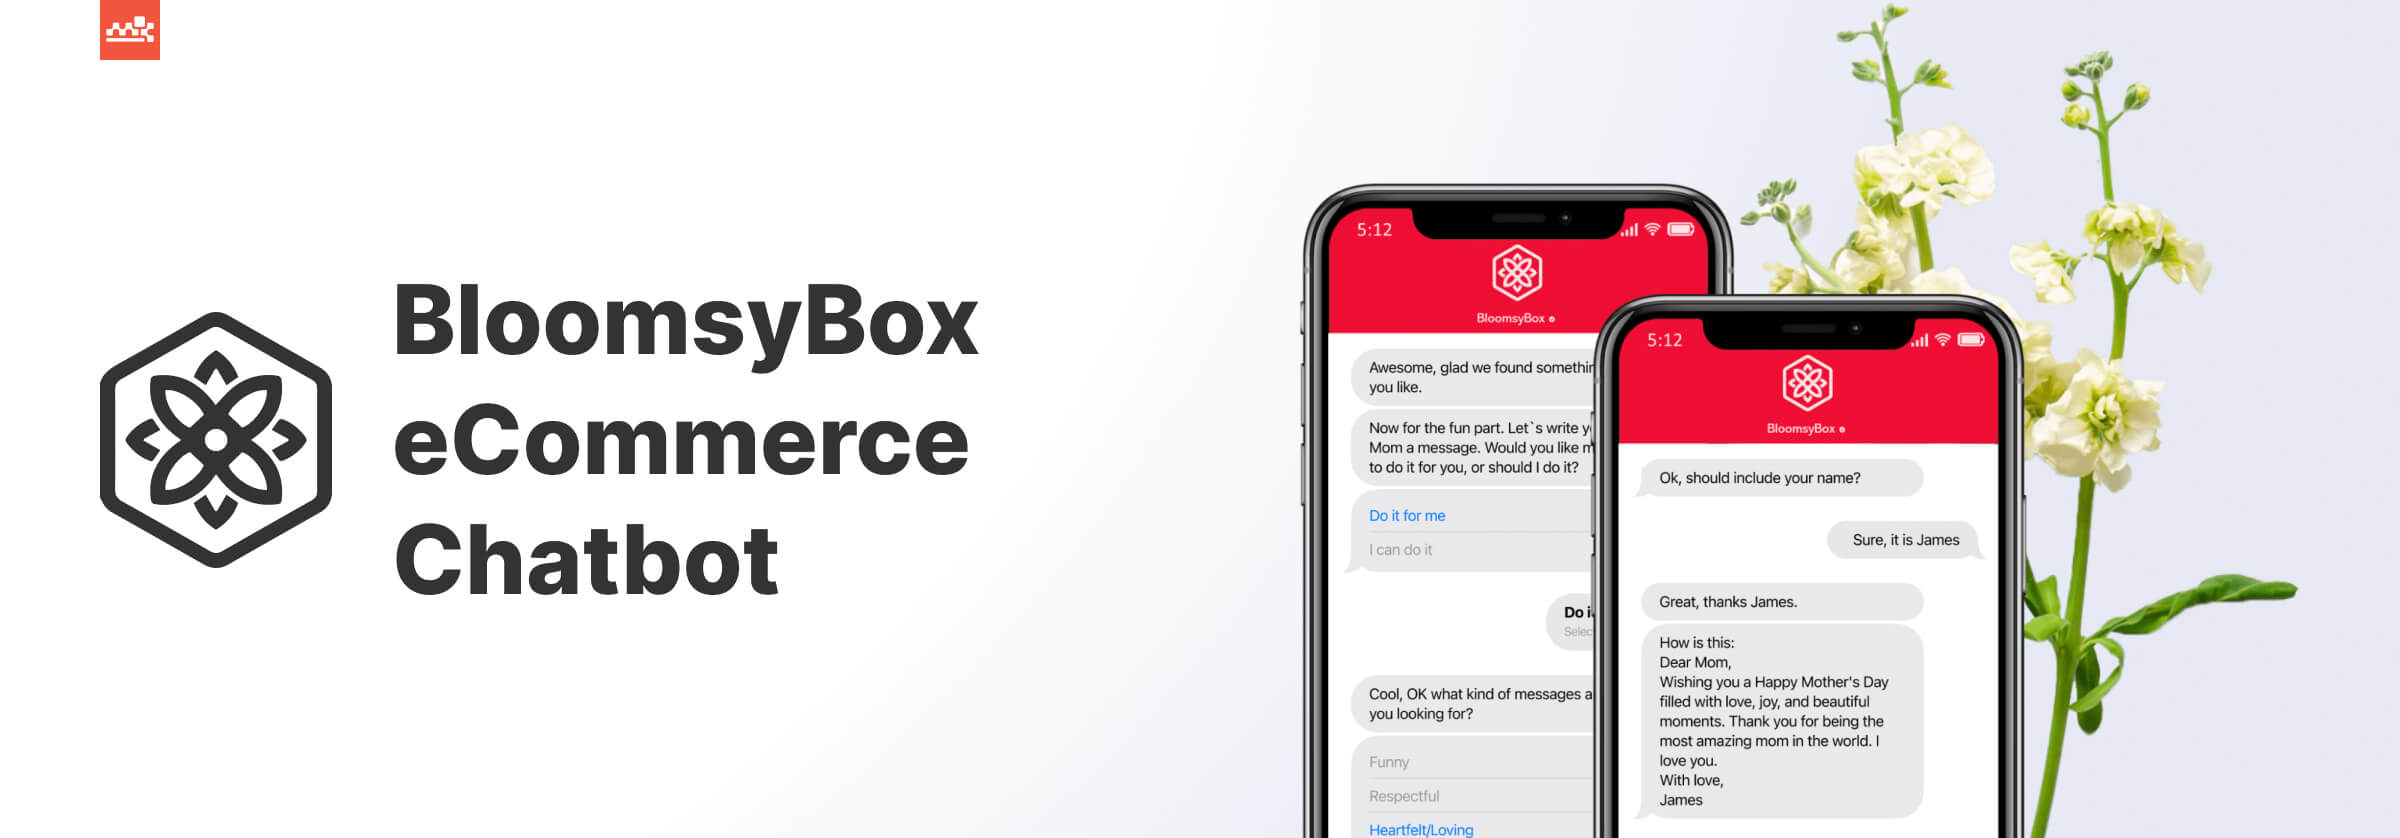 BloomsyBox eCommerce Chatbot 2